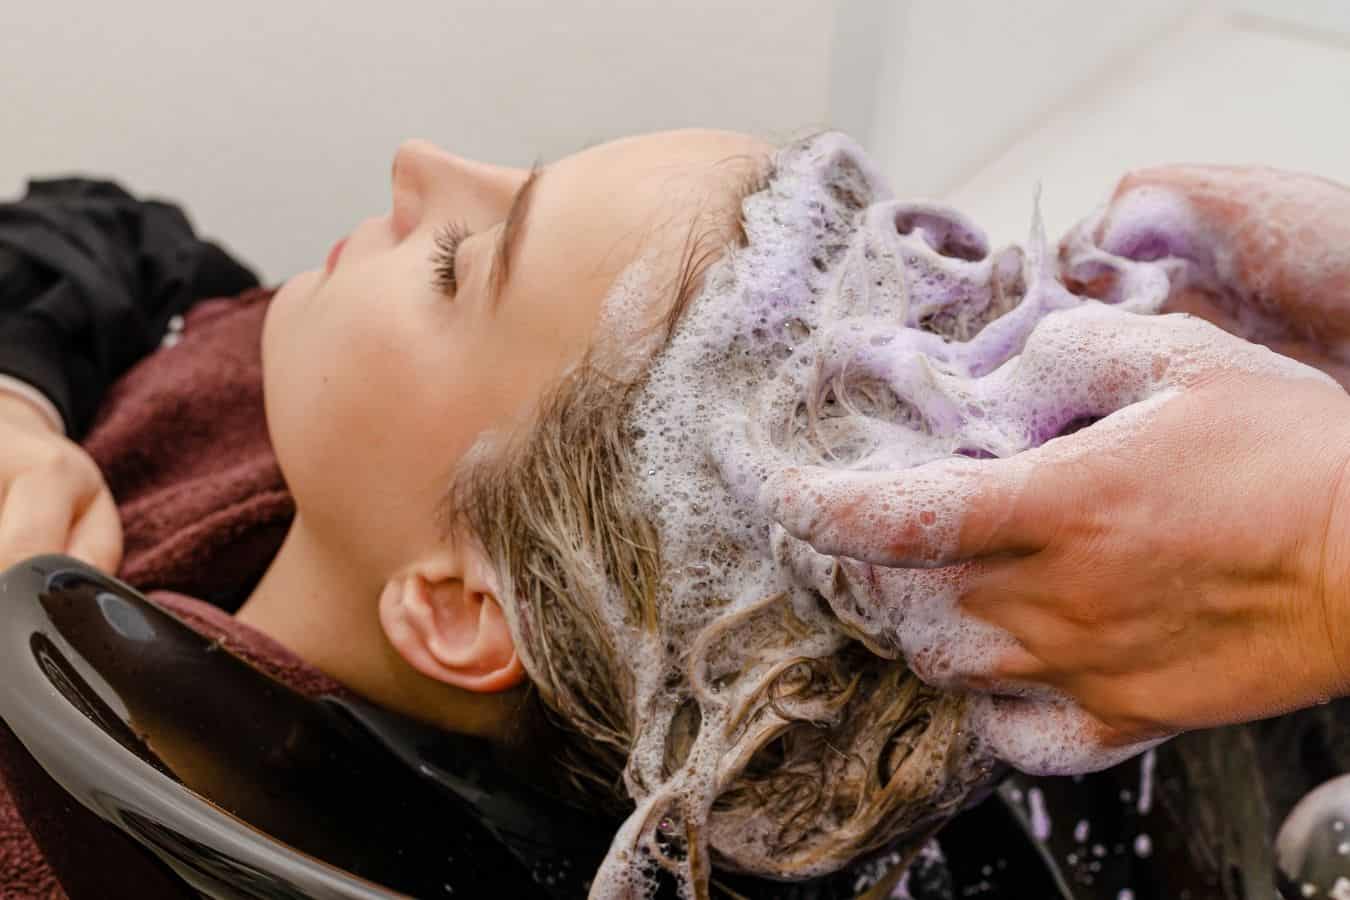 How Often Should I Use Purple Shampoo